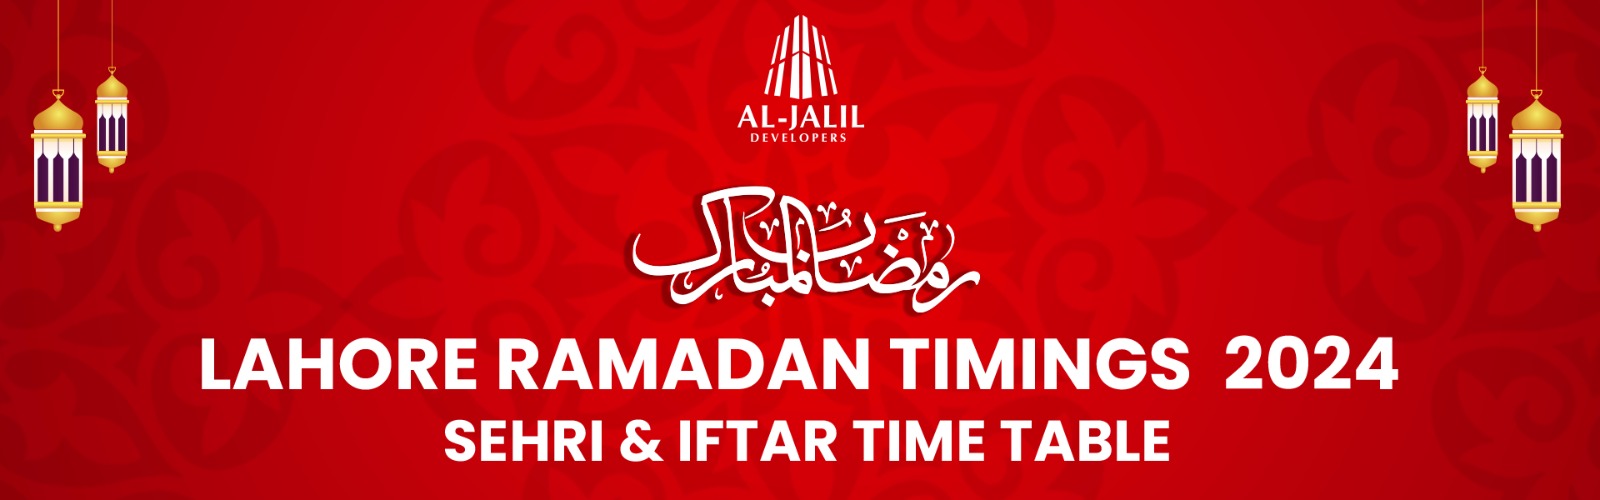 Lahore Ramadan Timings 2024 Sehri & iftar time table